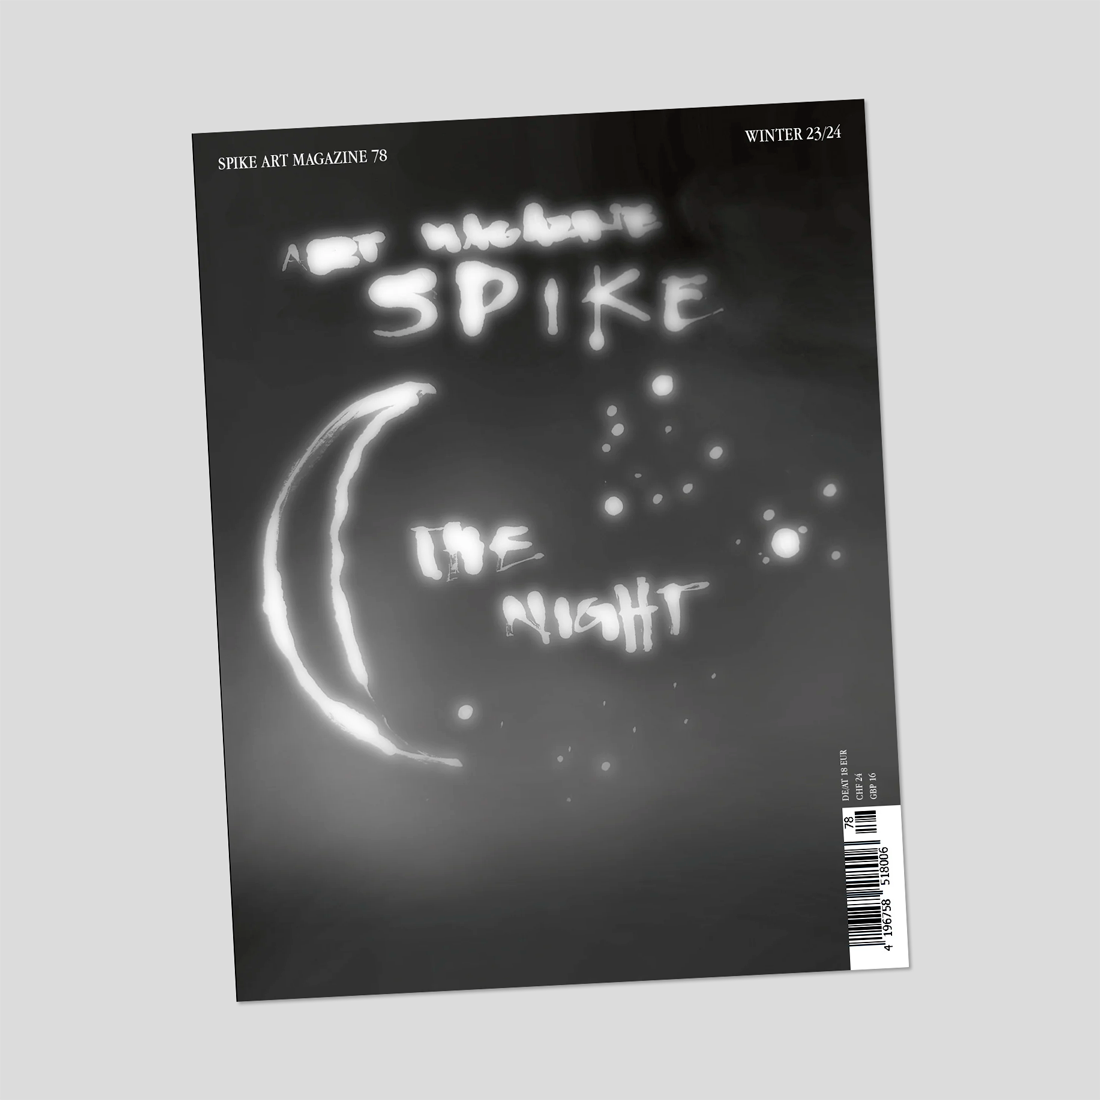 Spike Art magazine #78